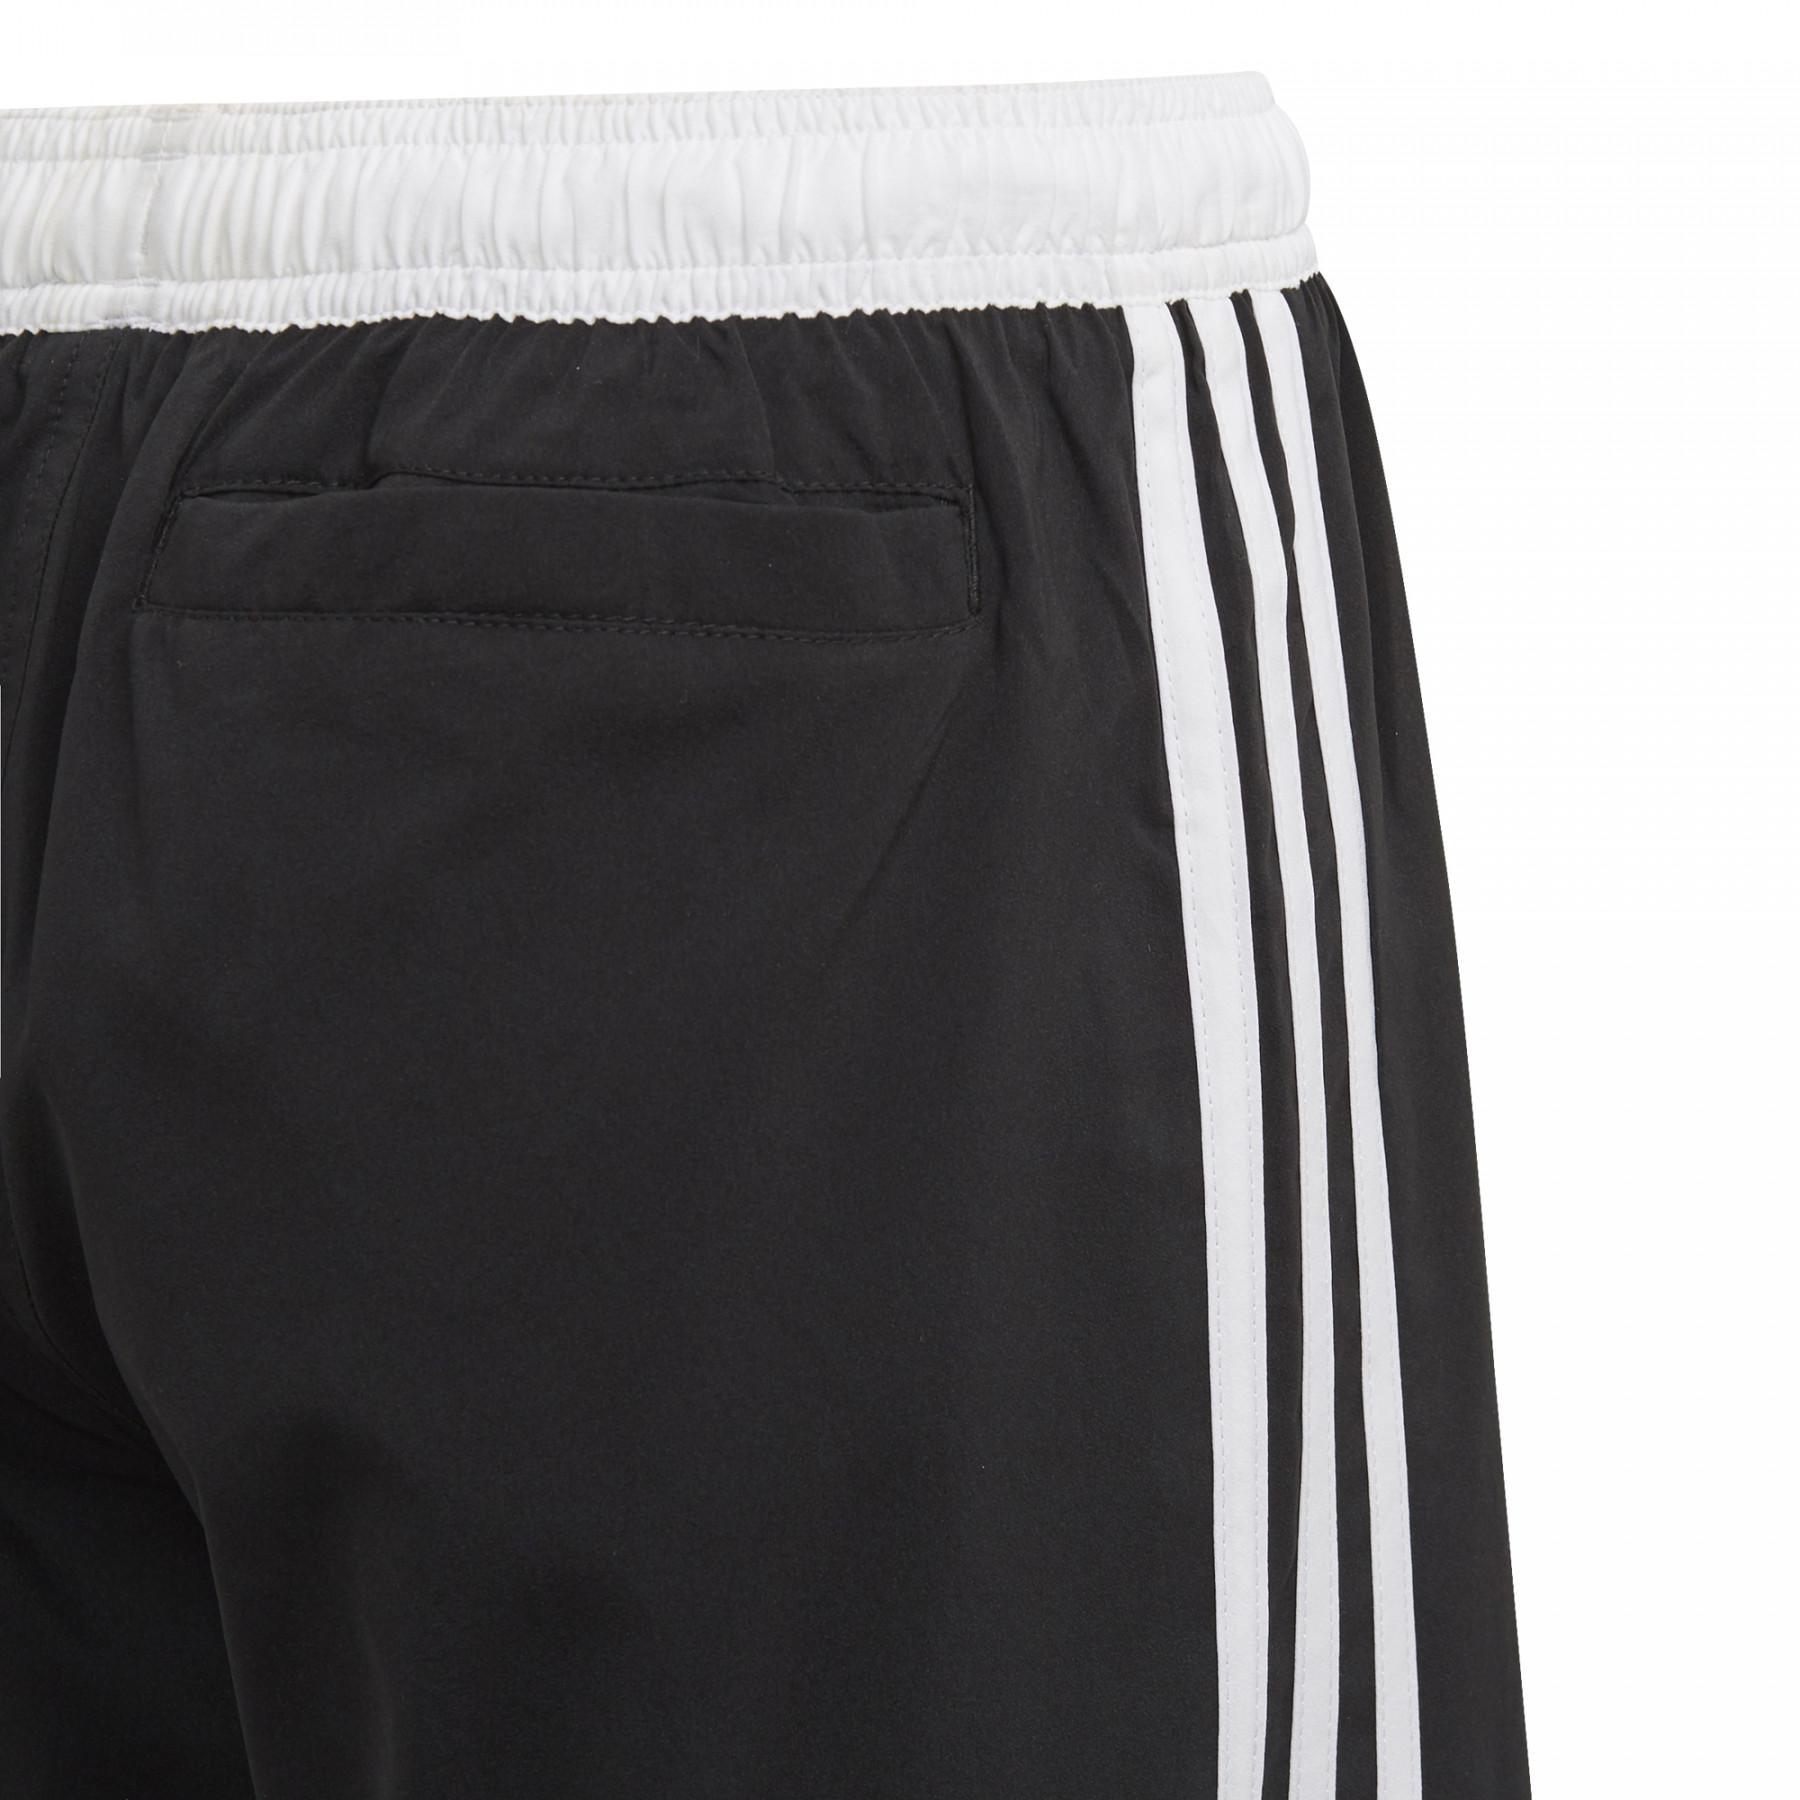 Children's swimming shorts adidas 3-Stripes